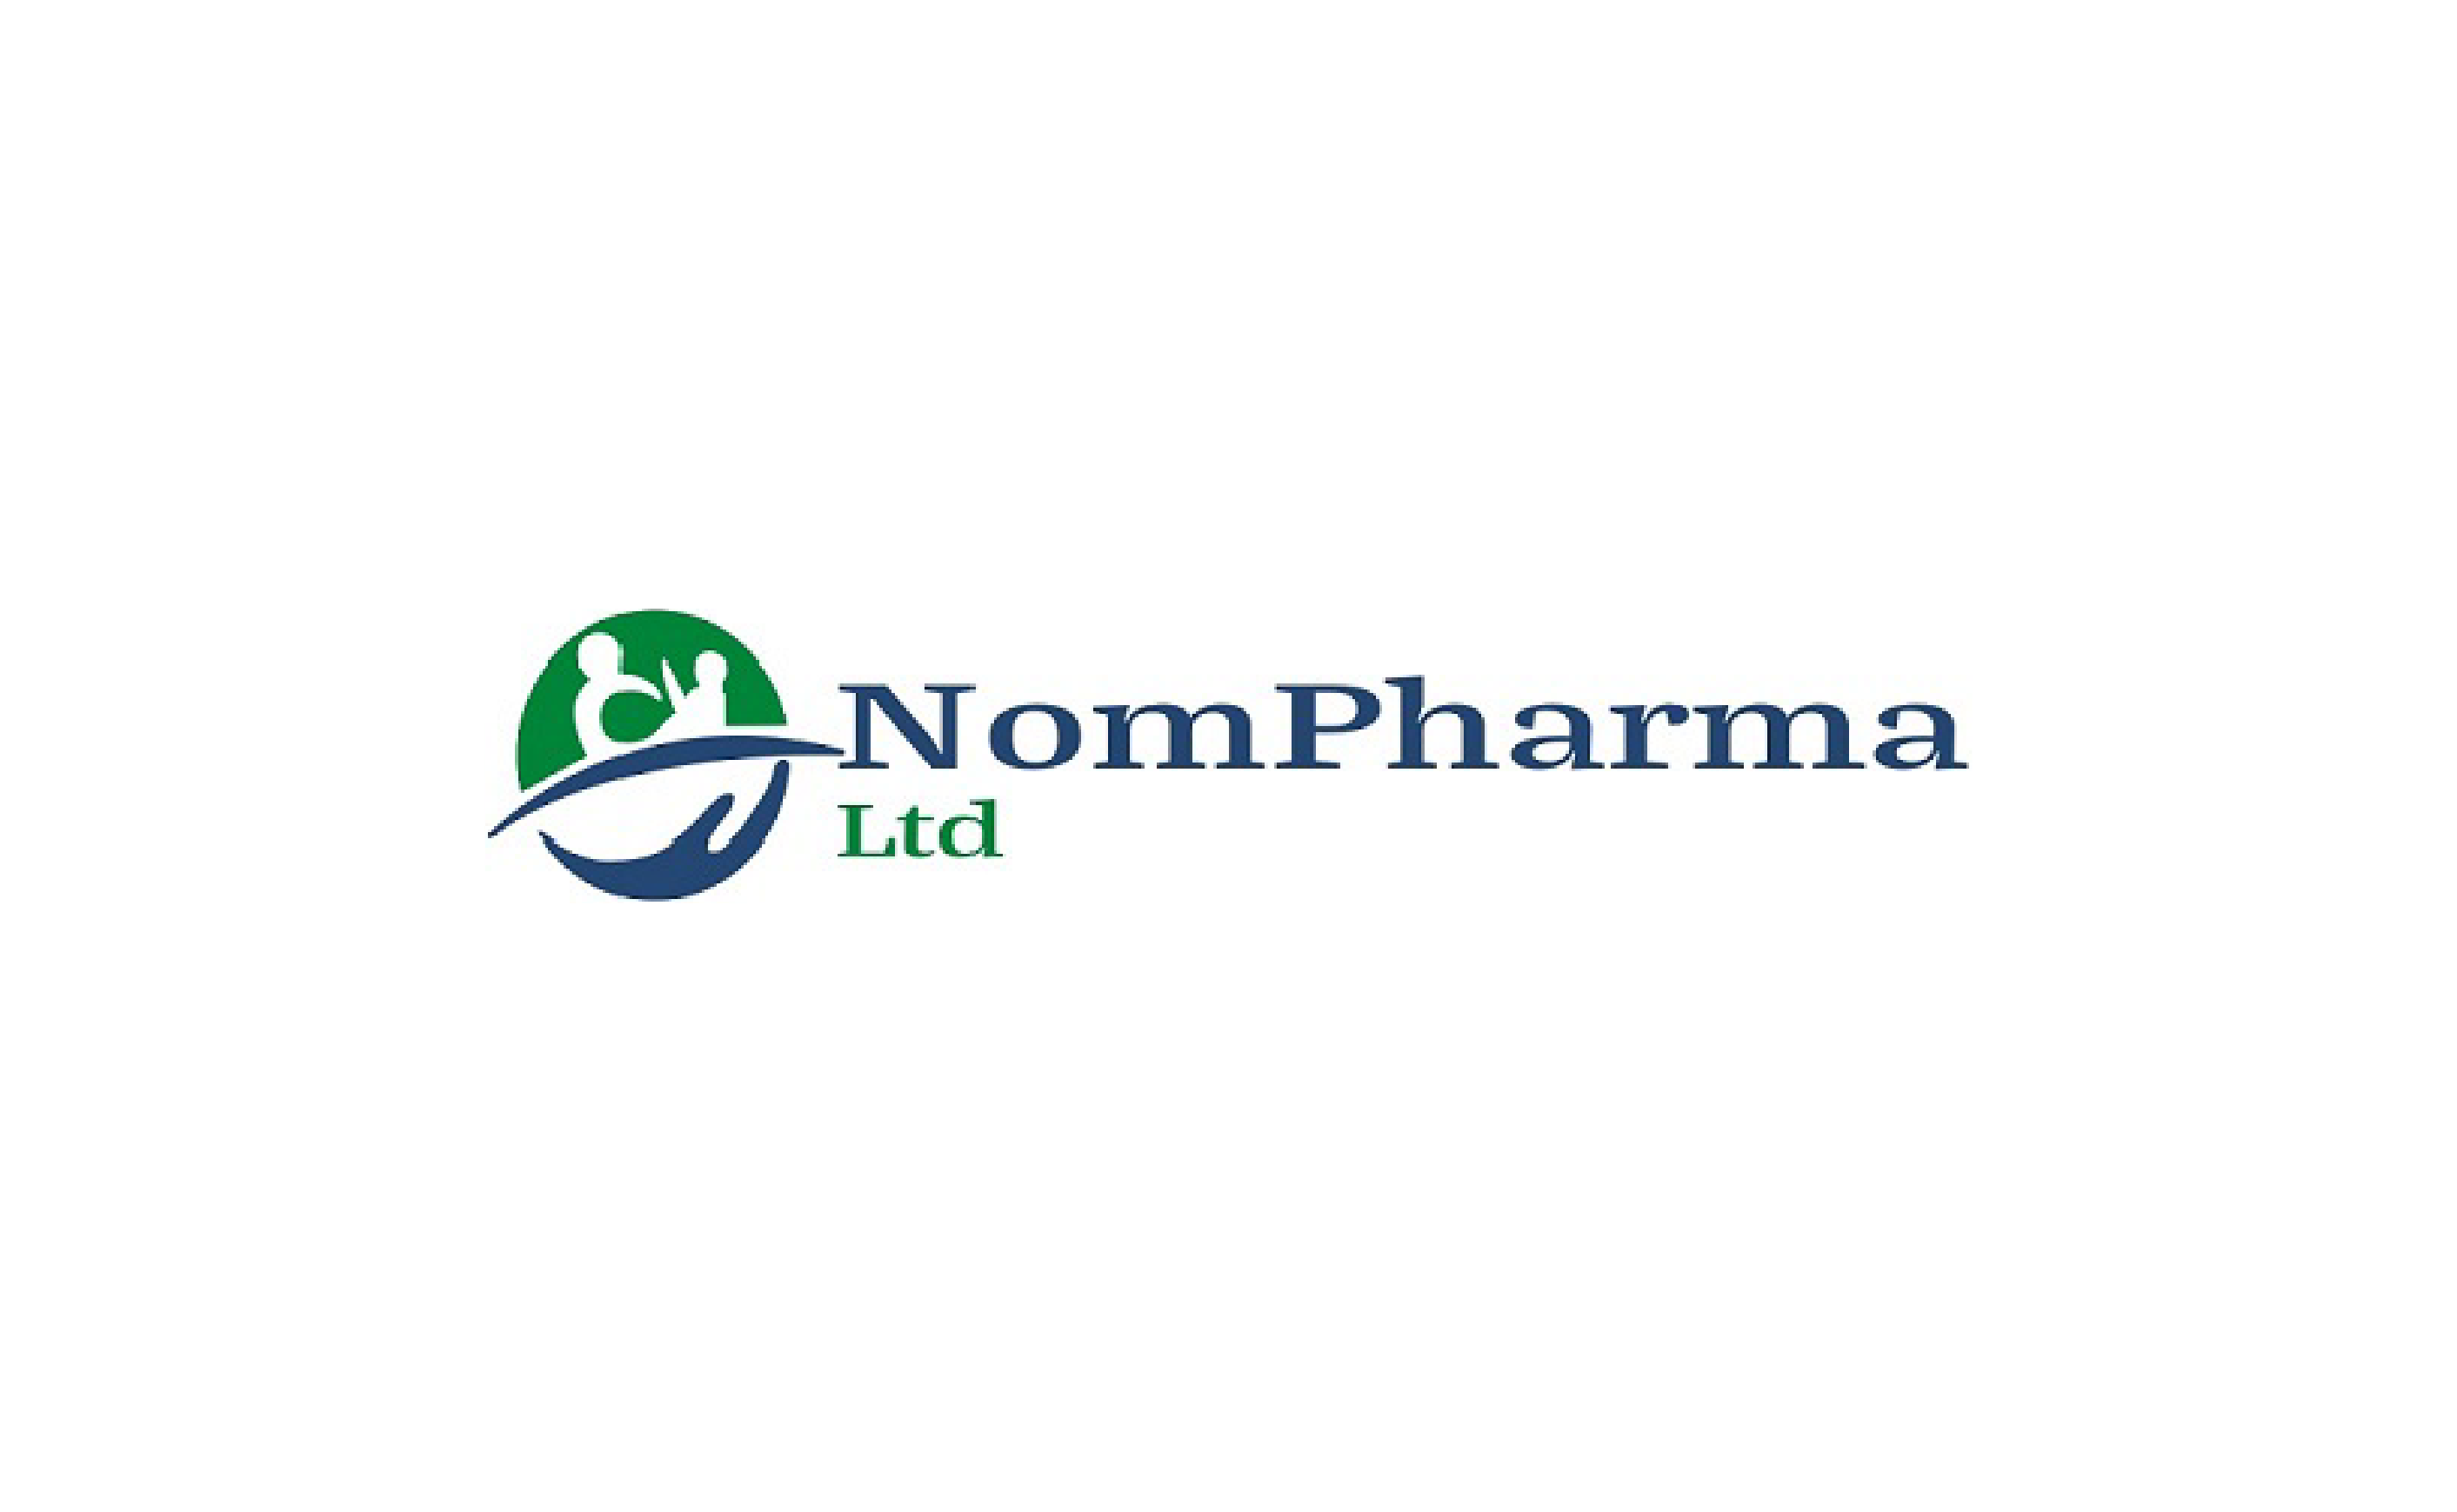 NomPharma Ltd Website Refresh Previous Logo